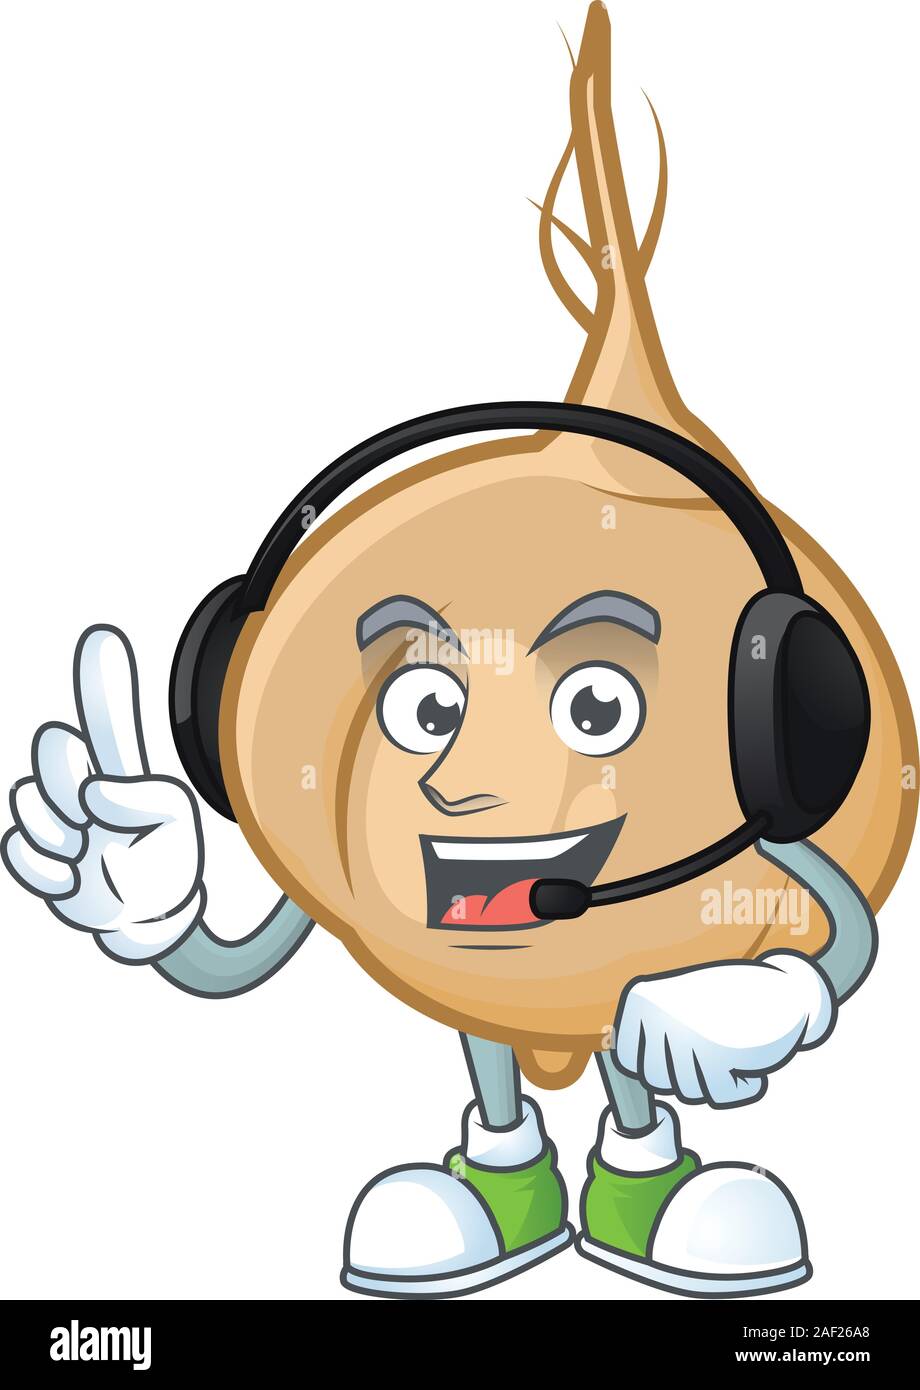 Jicama cute cartoon character design with headphone Stock Vector